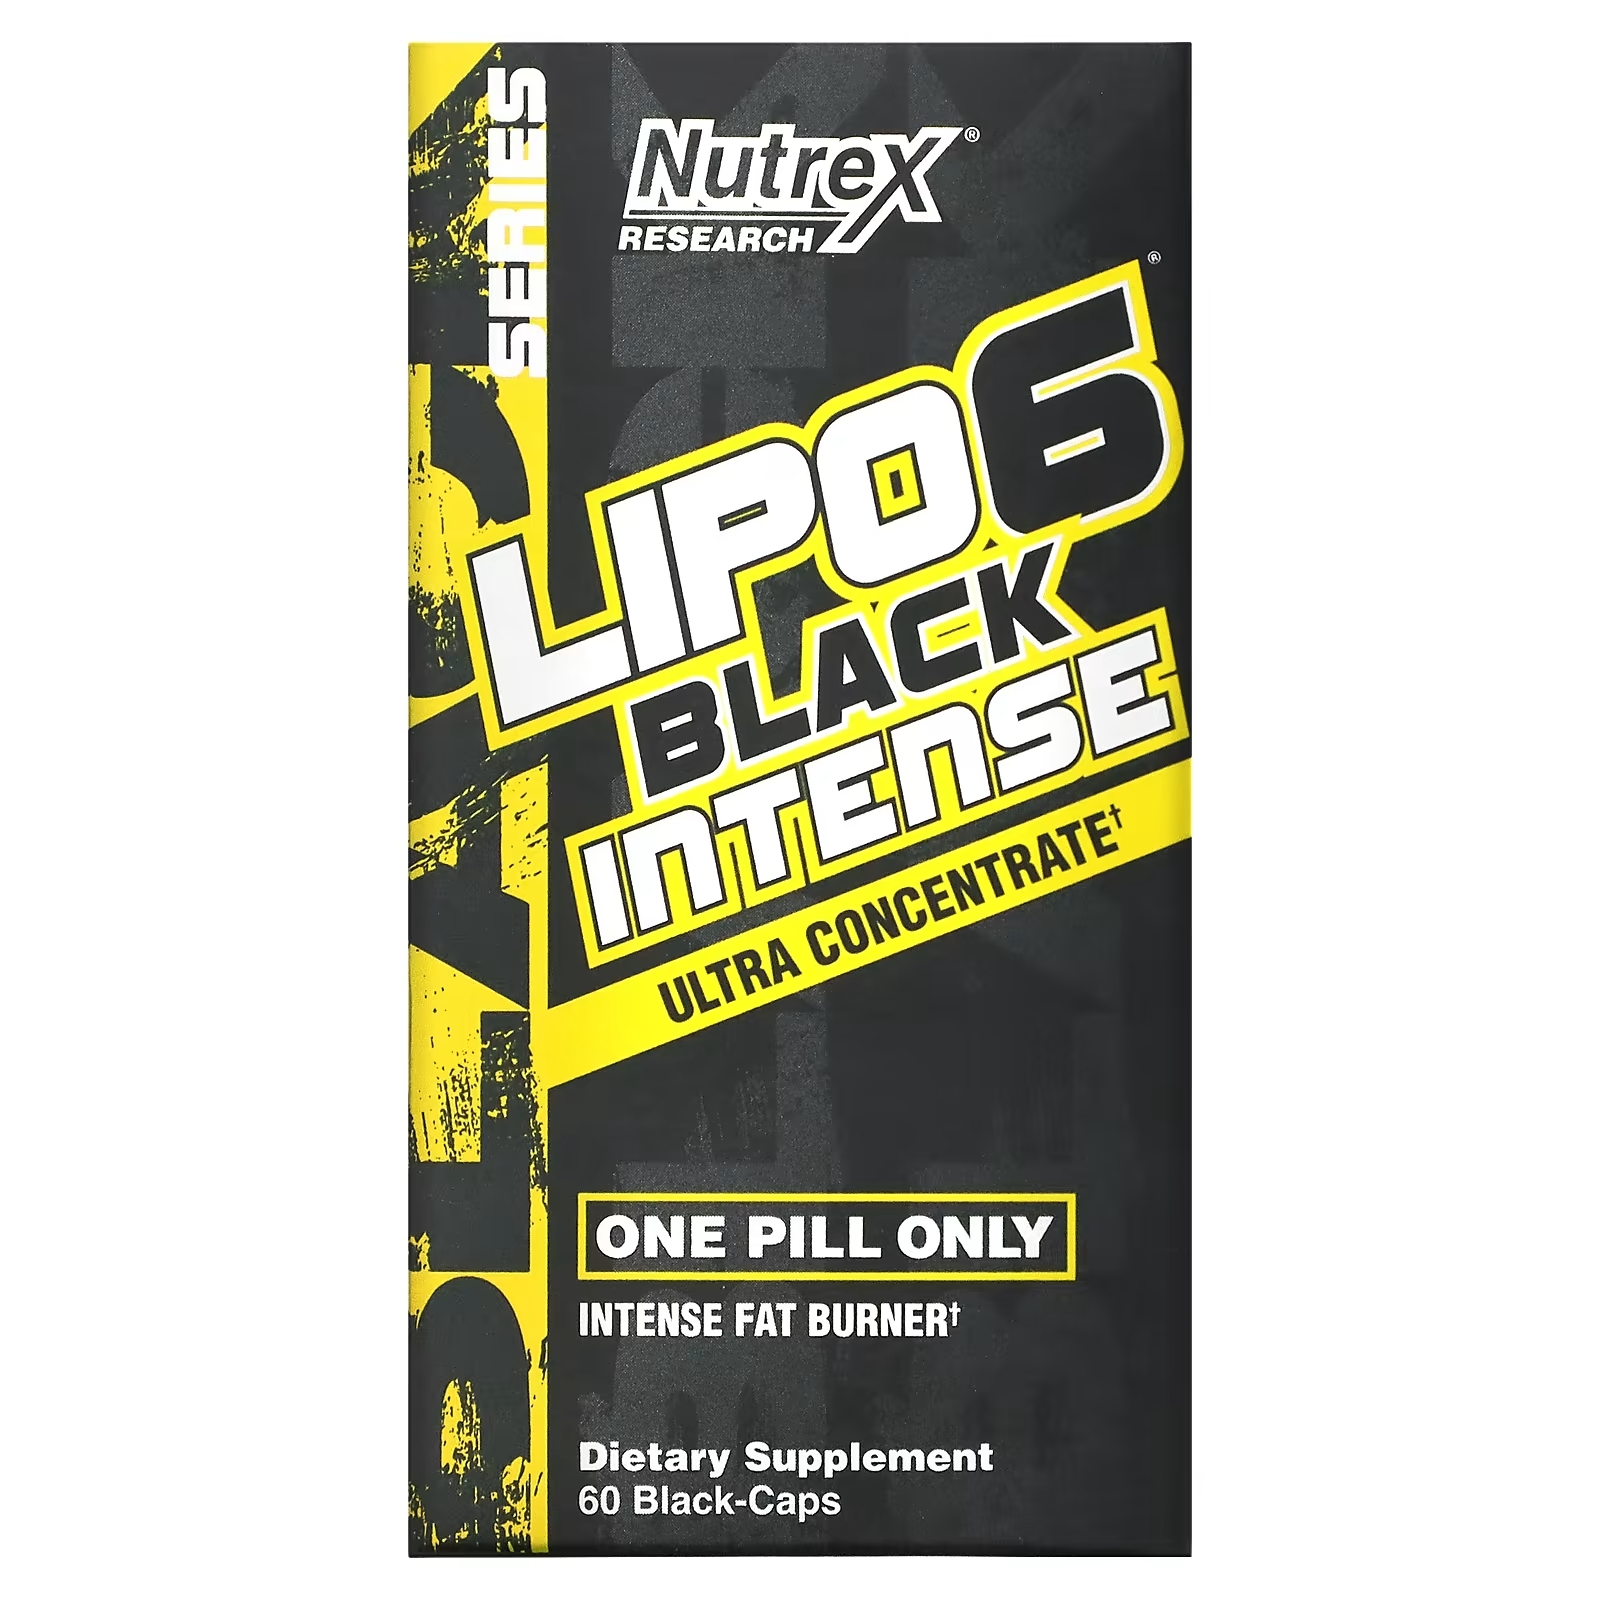 Ультраконцентрат Nutrex Research LIPO-6 Black Intense, 60 капсул nutrex research lipo 6 black ultra concentrate 60 жидких капсул